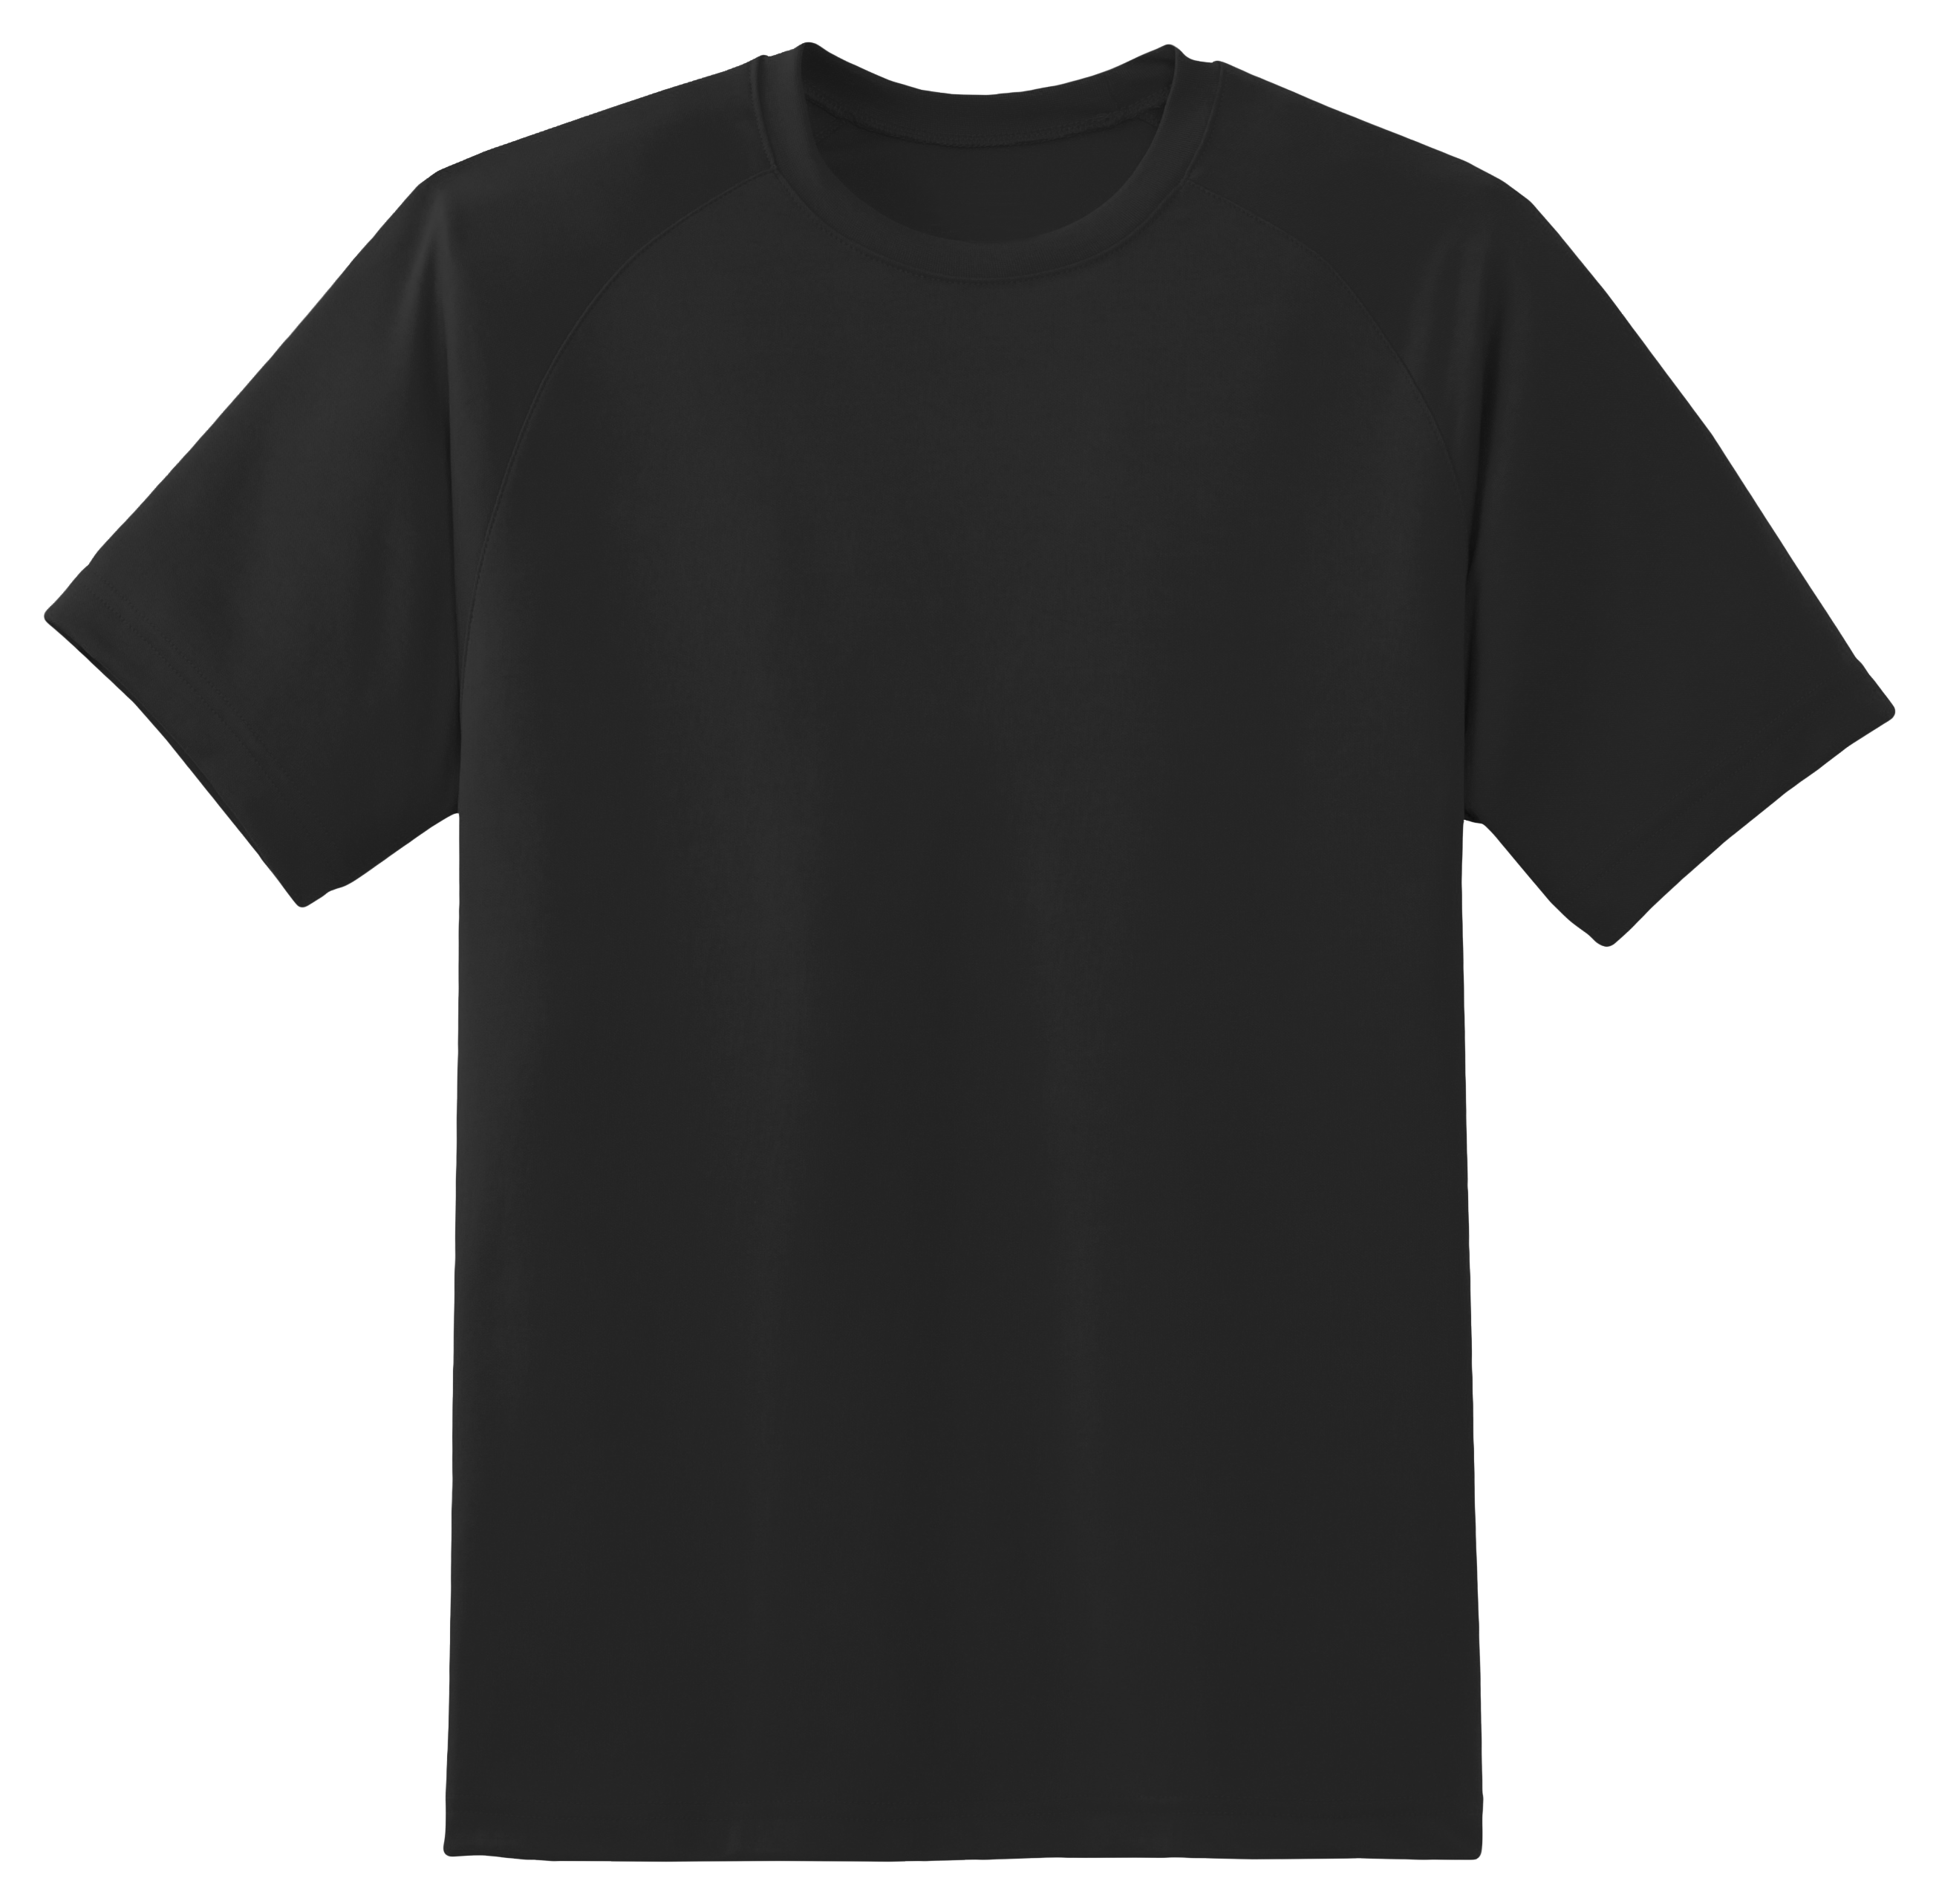 Black T Shirt Png Transparent Image - Tshirt, Transparent background PNG HD thumbnail